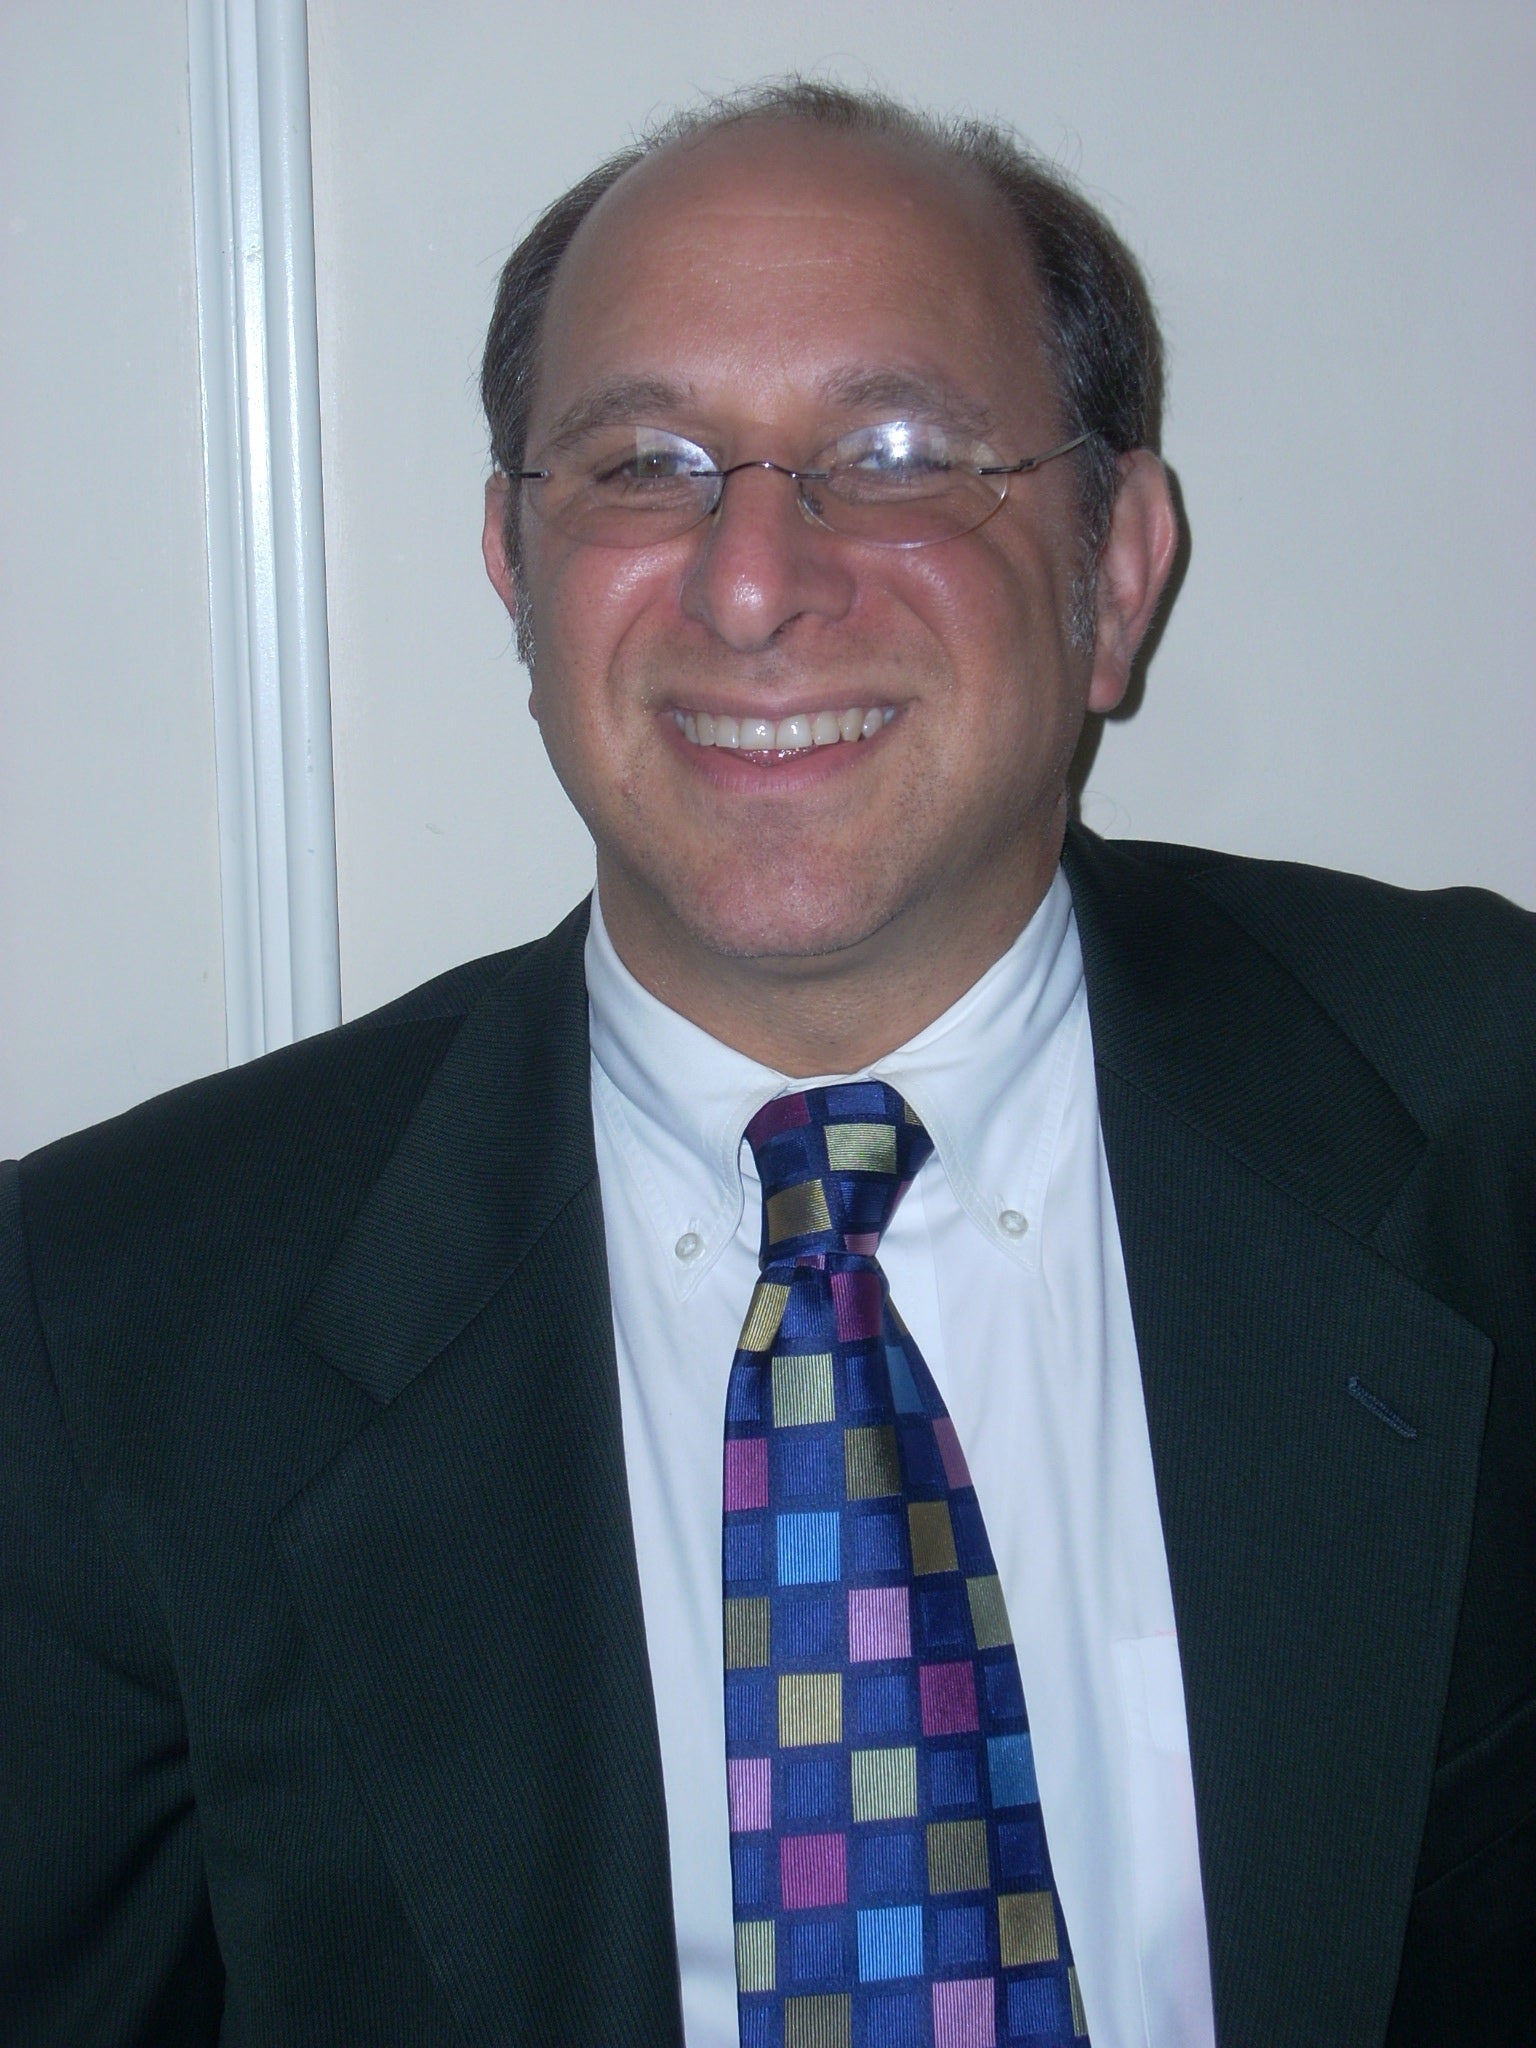 David Feldman